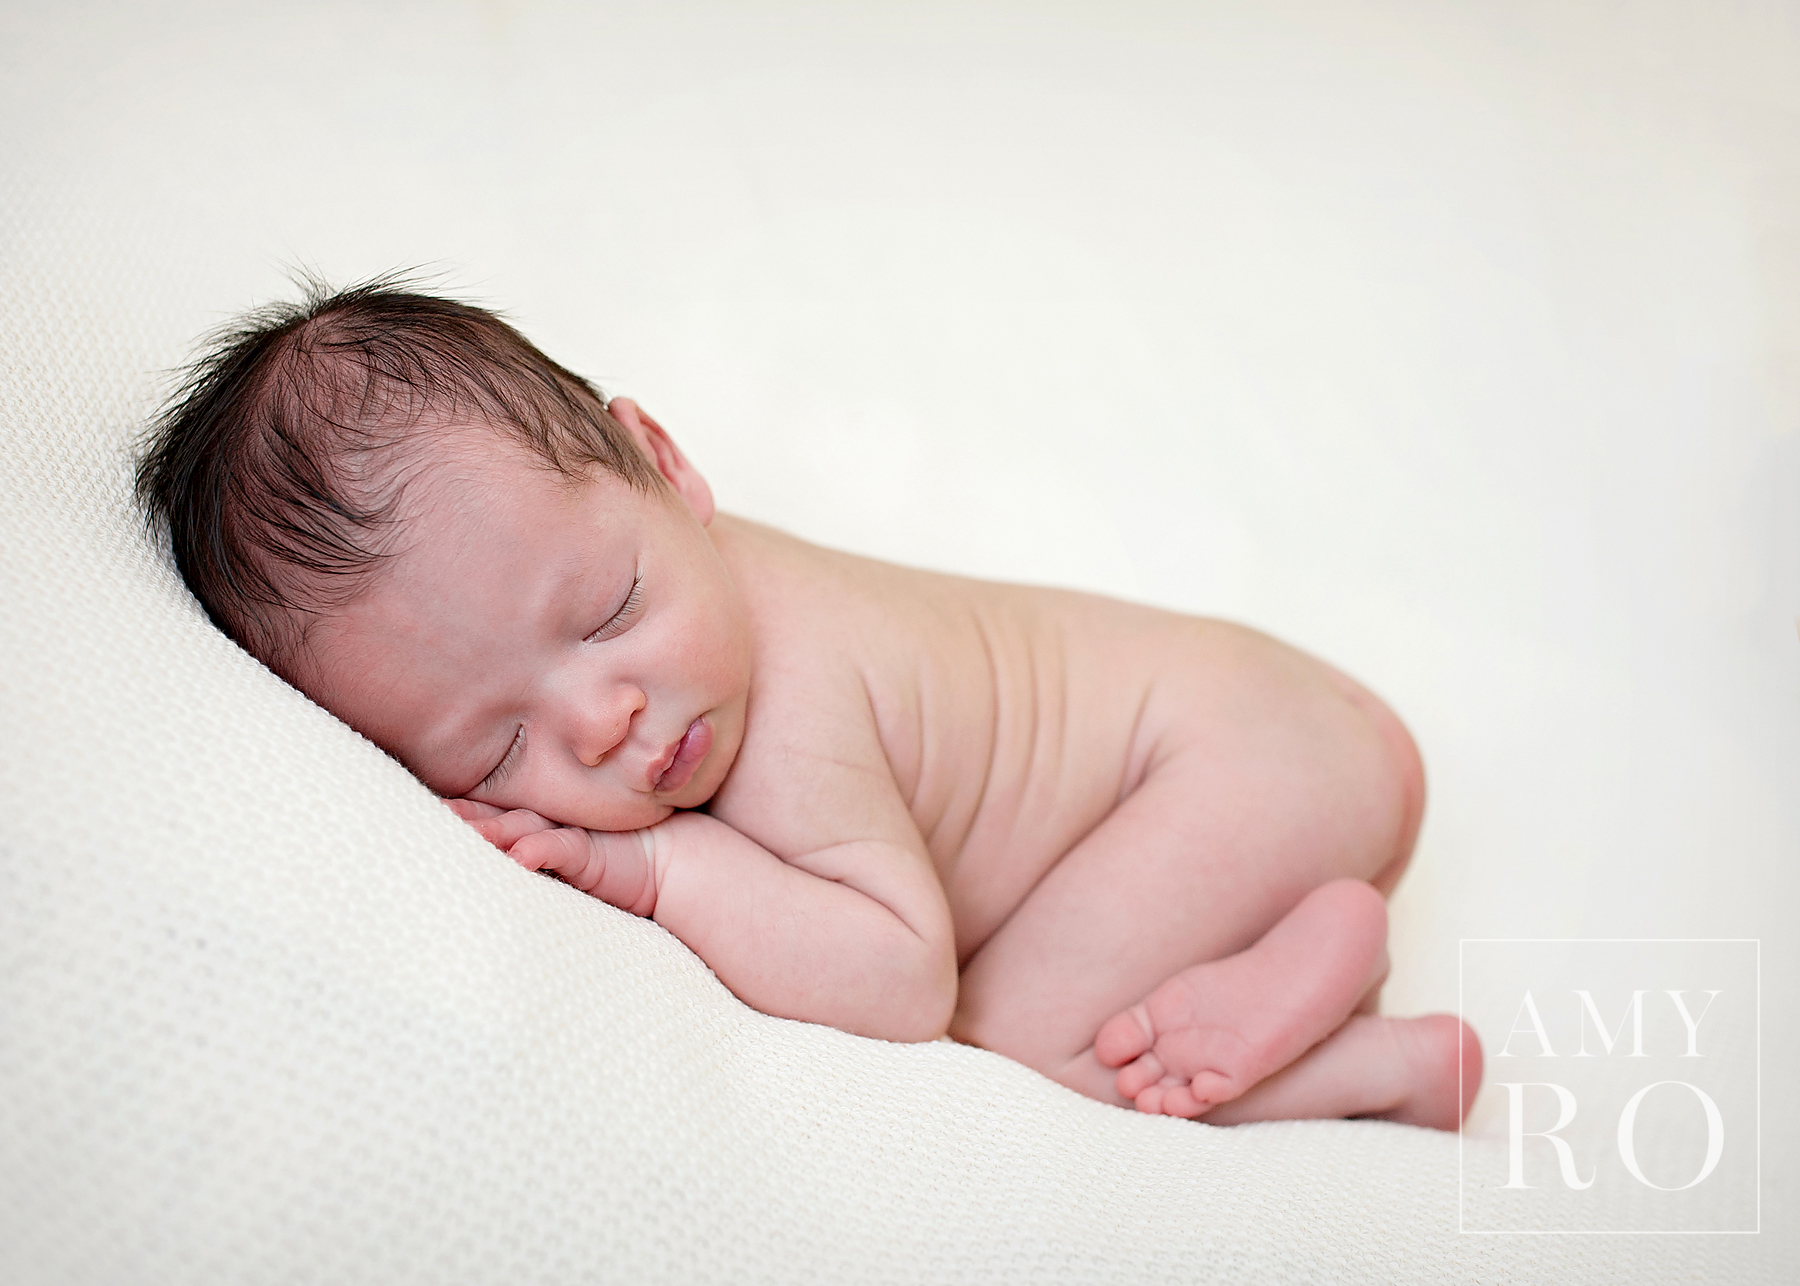 Image of newborn baby boy on cream blanket sleeping curled up during a newborn session Rhode Island Newborn photographer Amy Ro